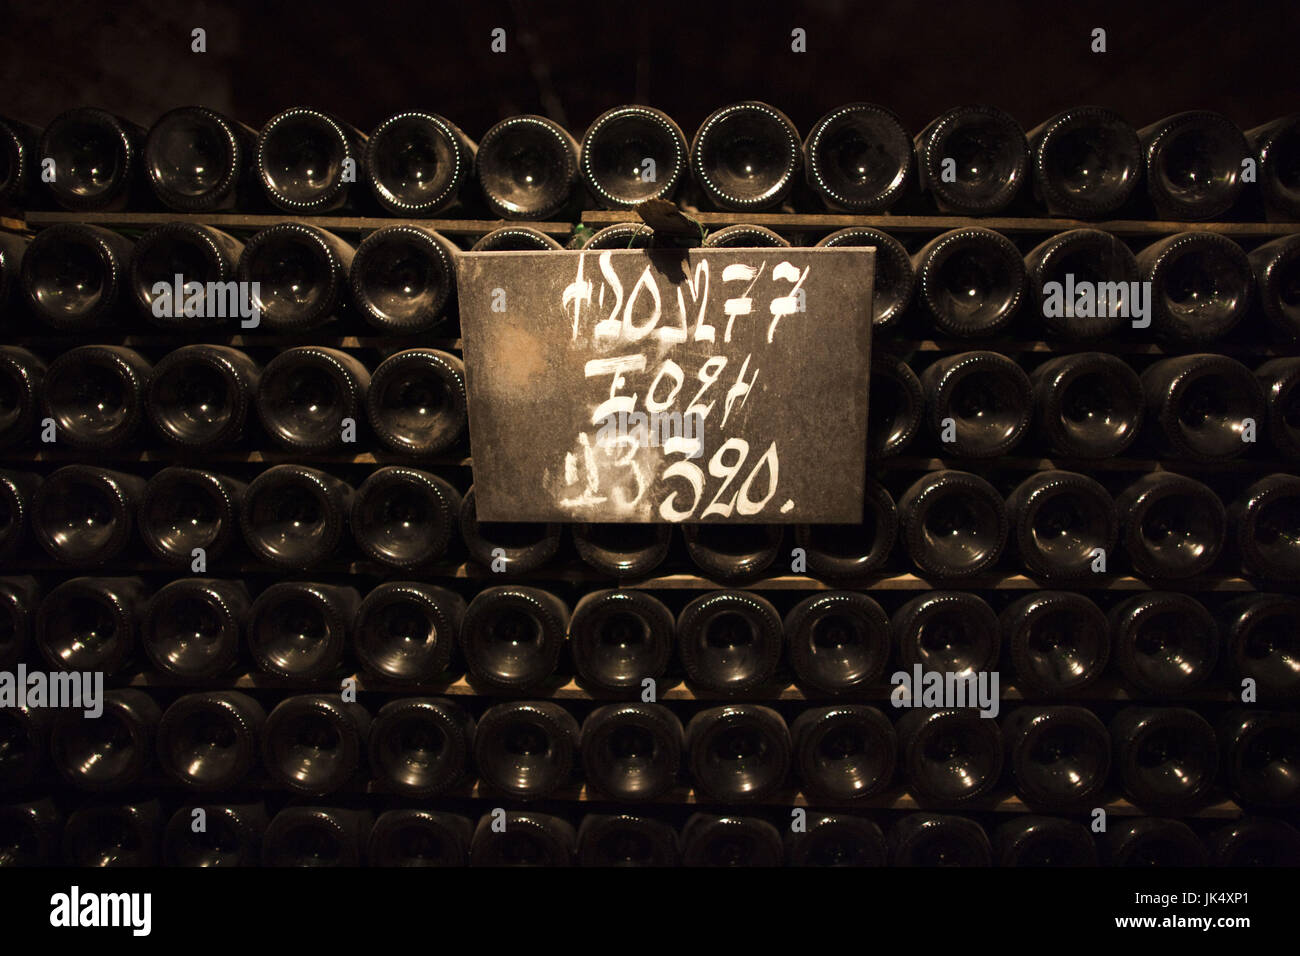 France, Marne, Champagne, Epernay, cave à champagne Moët & Chandon, caves de champagne Banque D'Images